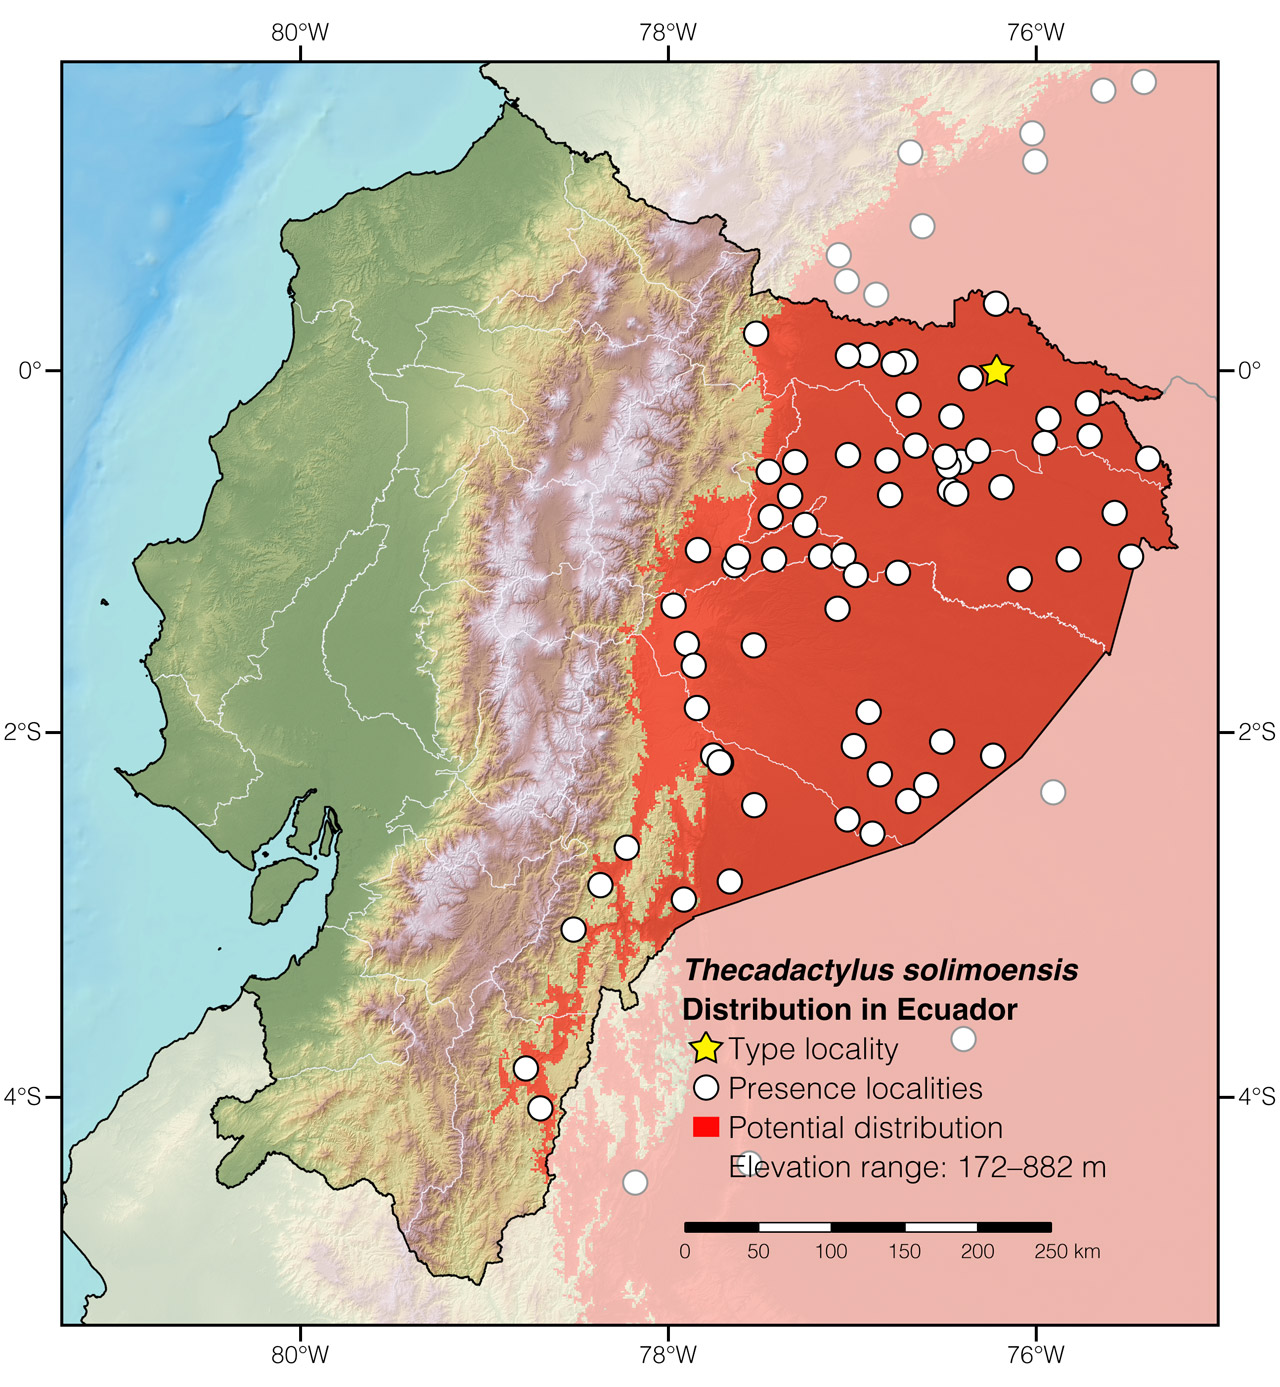 Distribution of Thecadactylus solimoensis in continental Ecuador